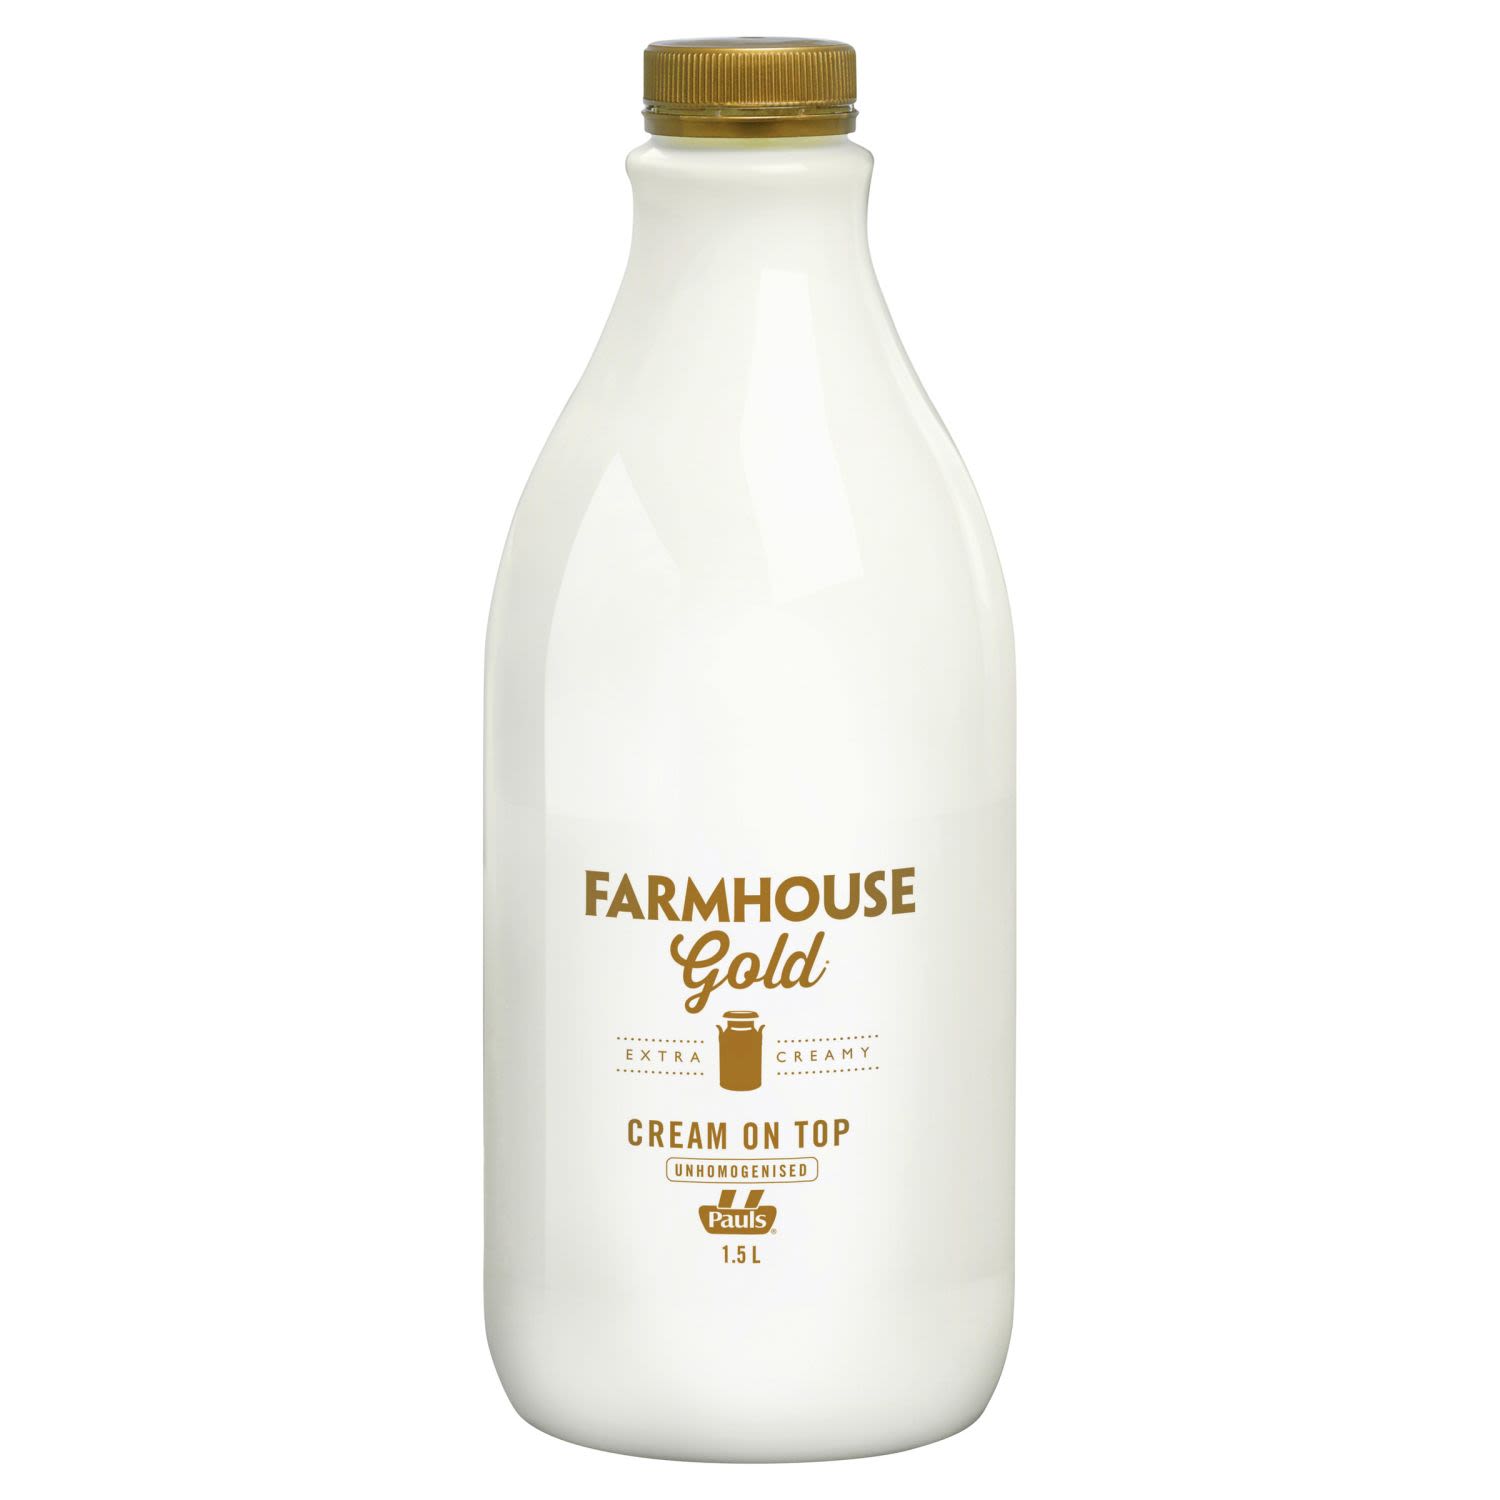 Pauls Farmhouse Gold Milk Cream On Top, 1.5 Litre